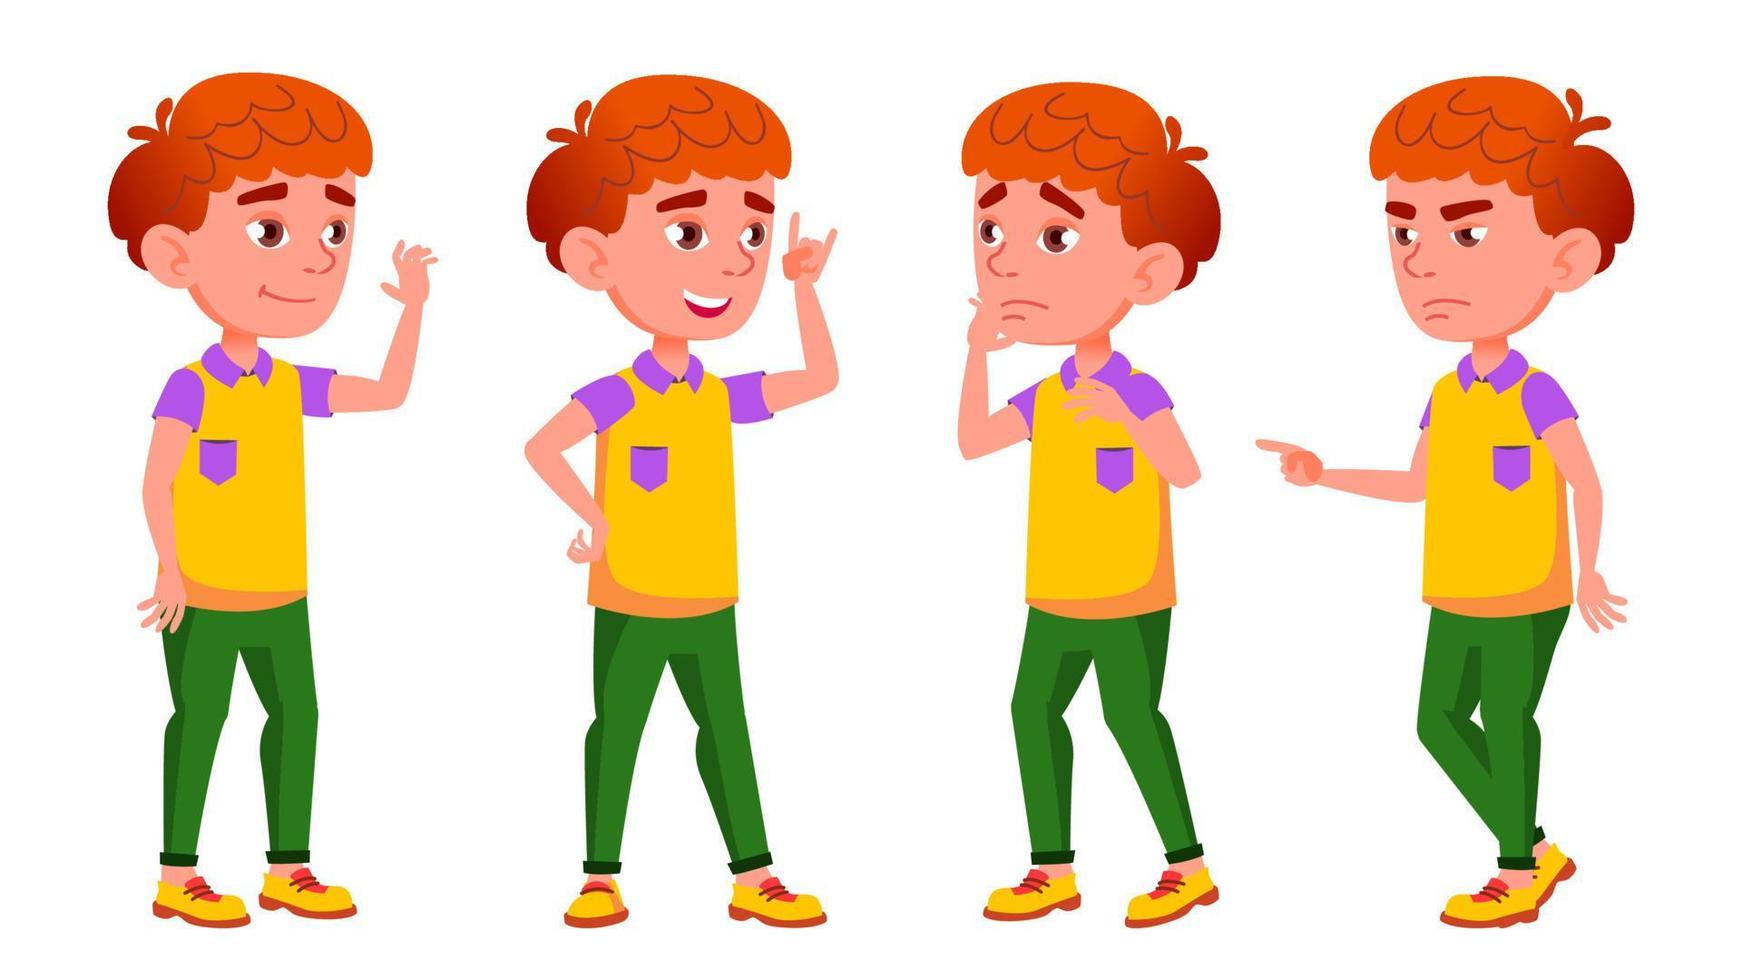 Boy Schoolboy Kid Poses Set Vector. Red Head. Emotions. For Web, Brochure, Poster Design. Isolated Cartoon Illustration vector